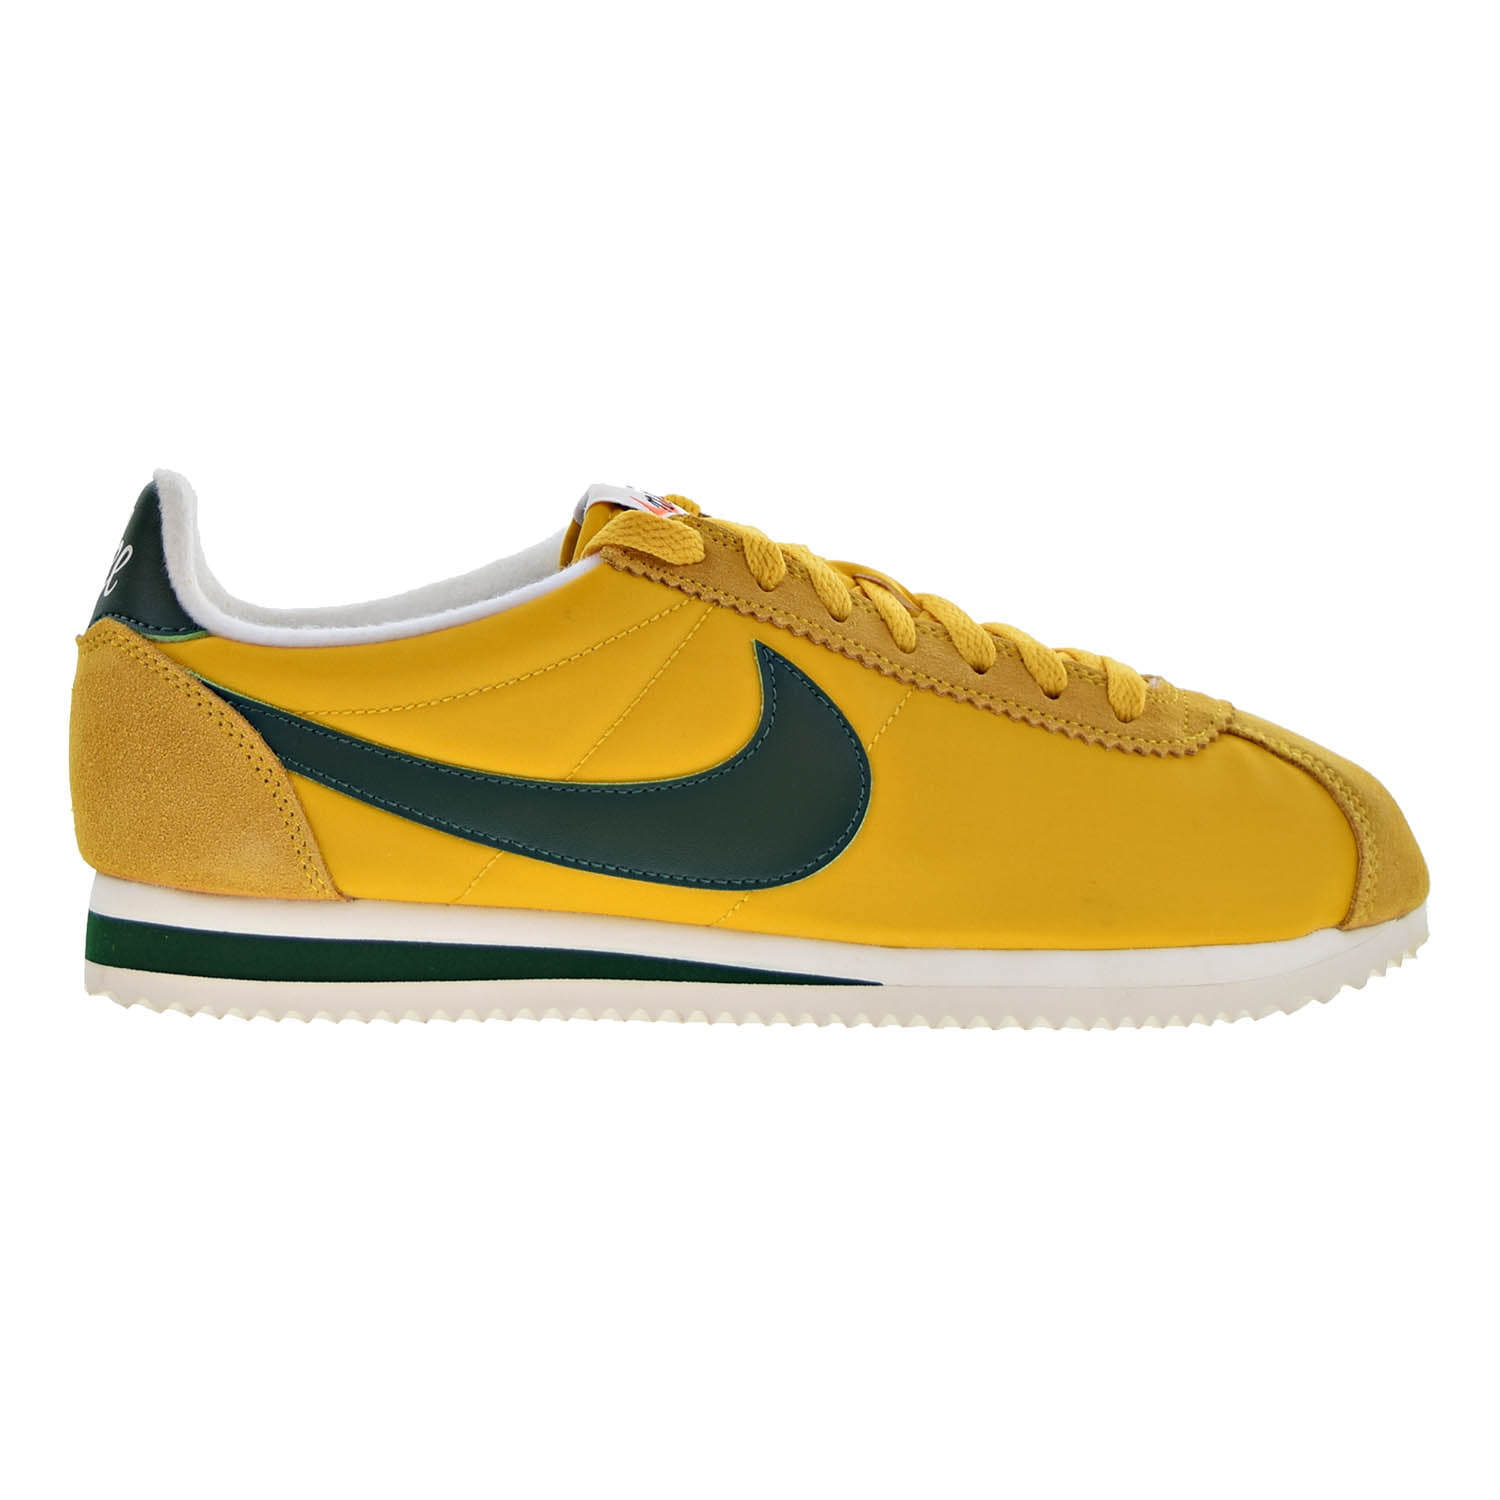 Bomen planten Jaar vervorming Nike Classic Cortez Nylon Premium Men's Shoes Yellow Ochre/Sail/Gorge Green  876873-700 - Walmart.com